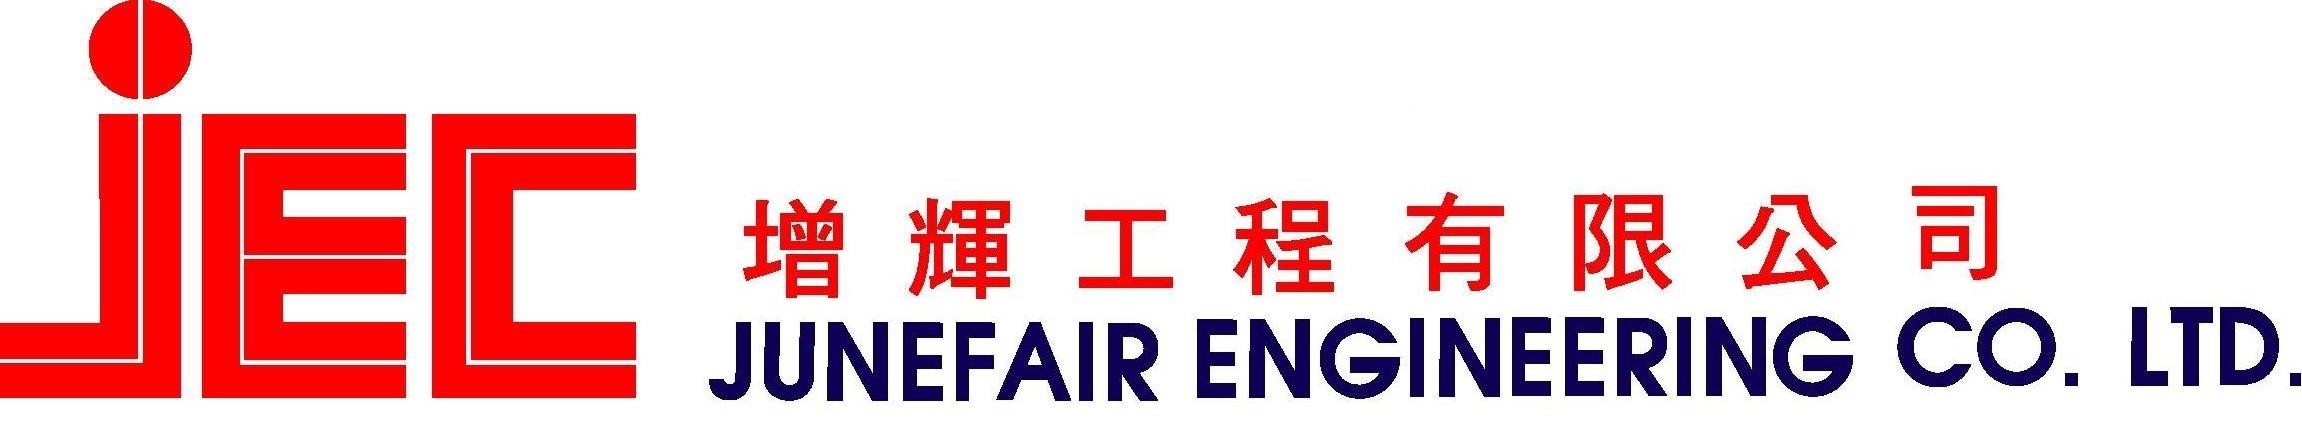 Logo of JUNEFAIR ENGINEERING CO., LTD.